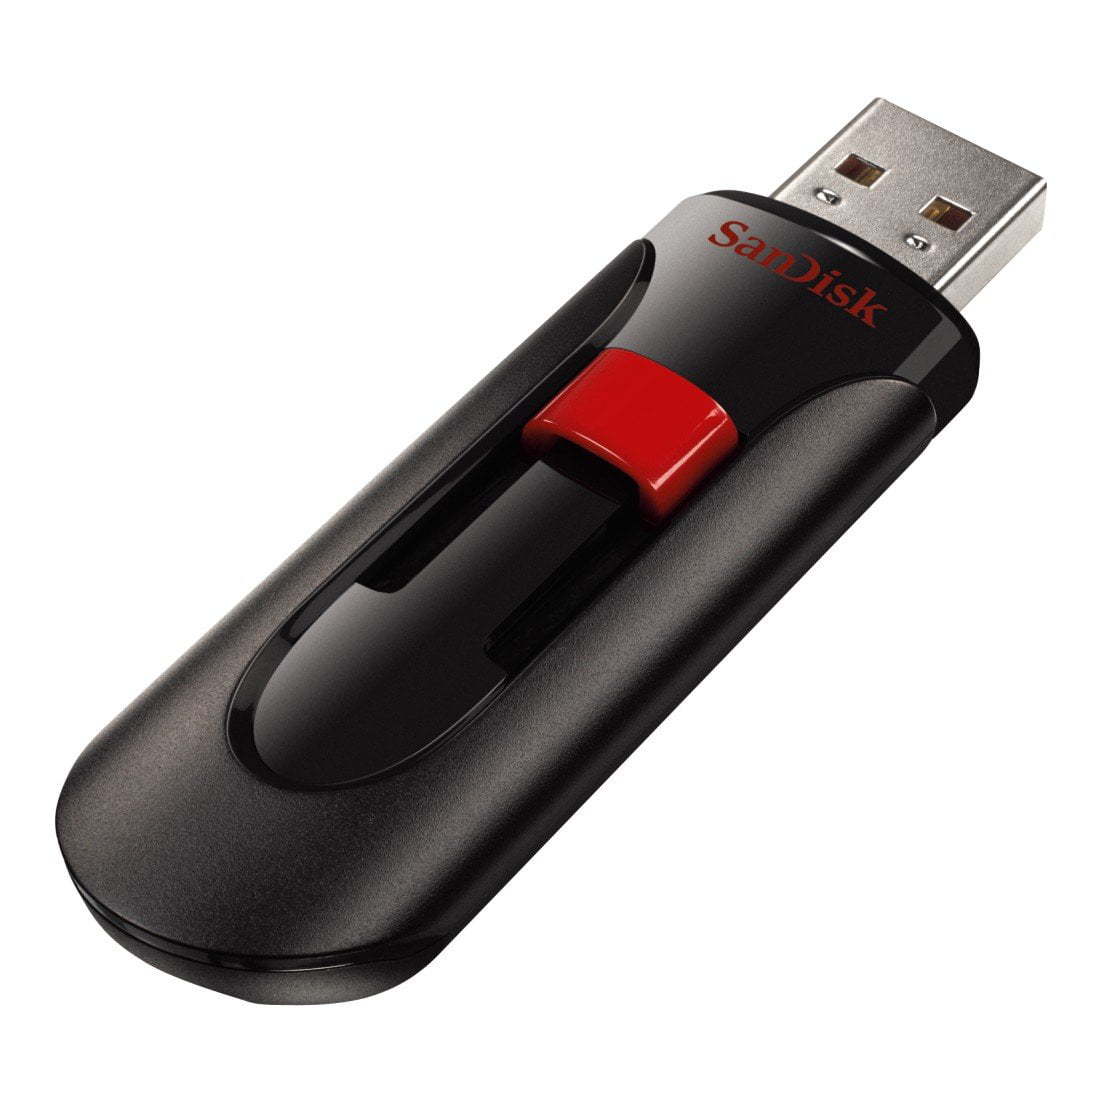 Yellow 1GB Swivel USB Flash Drive USB 2.0 Memory Stick LHN Bulk 5 Pack